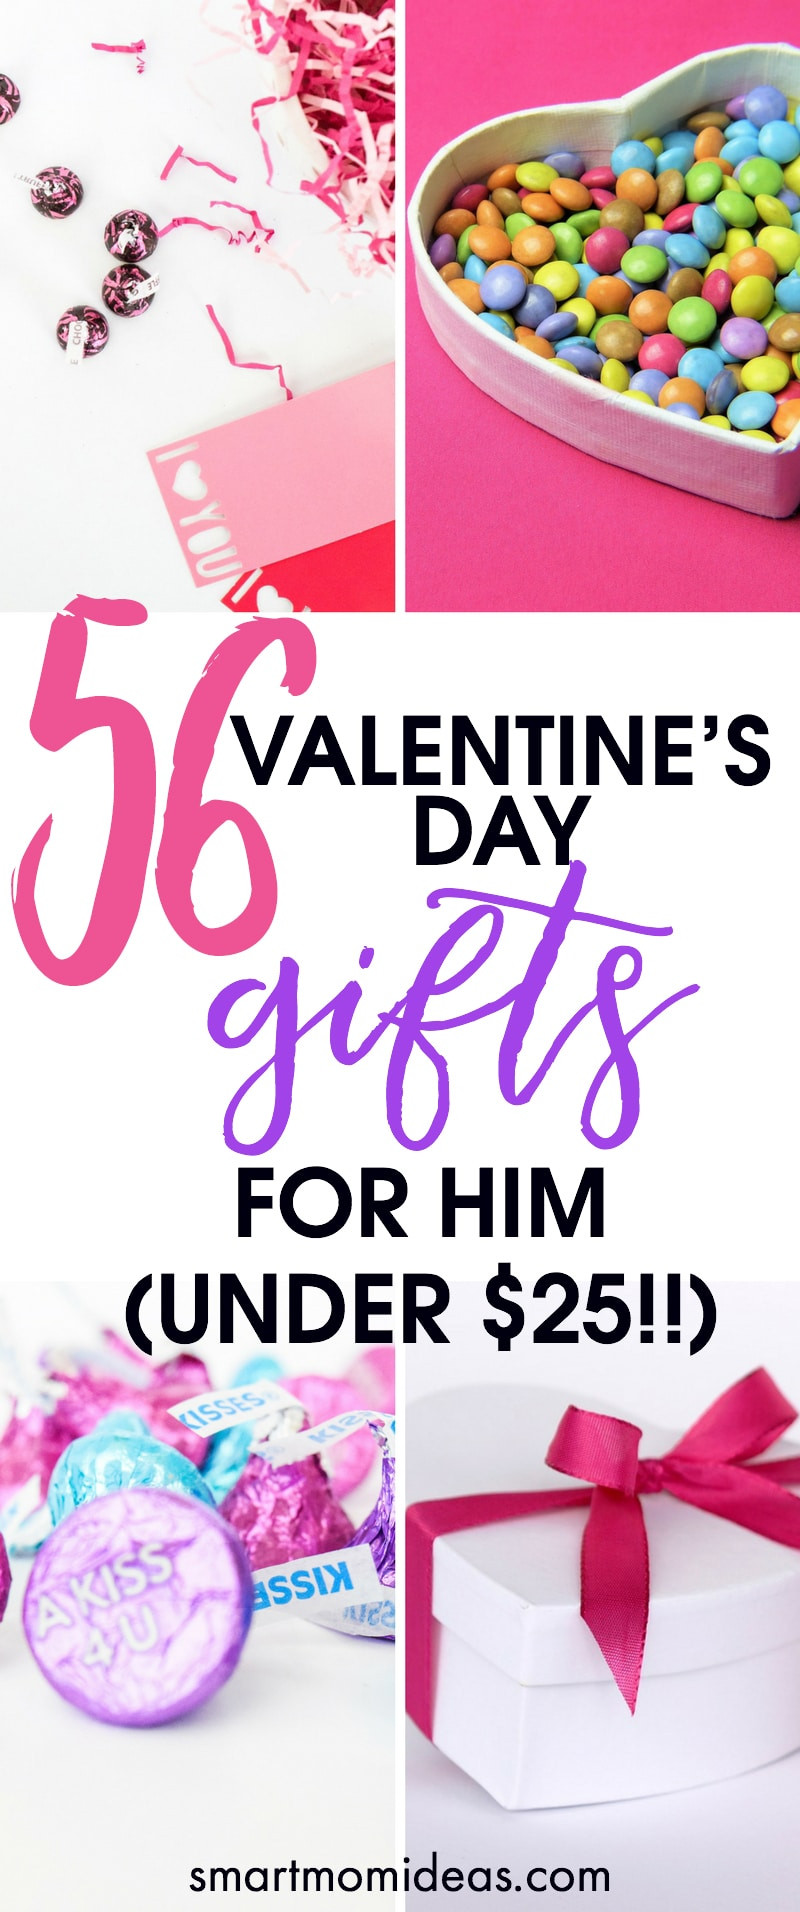 Valentine Gift Ideas For Him
 56 Valentine’s Day Gifts for Him Under $25